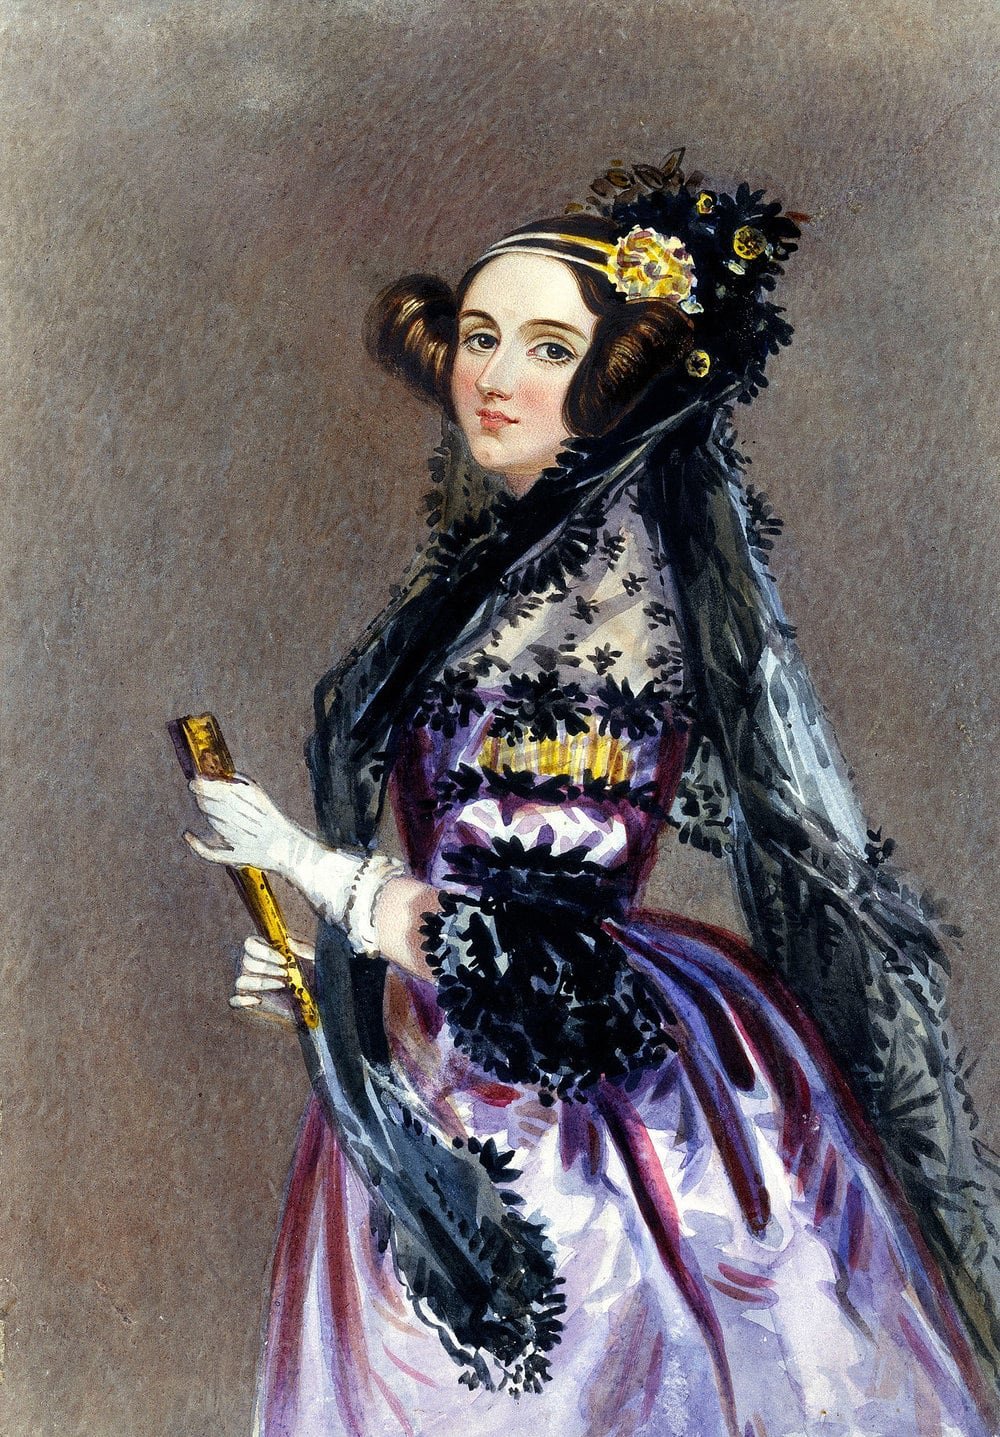 Ada_Lovelace_portrait-countess-of-lovelace-circa-1840-by-alfred-edward-chalon.jpg